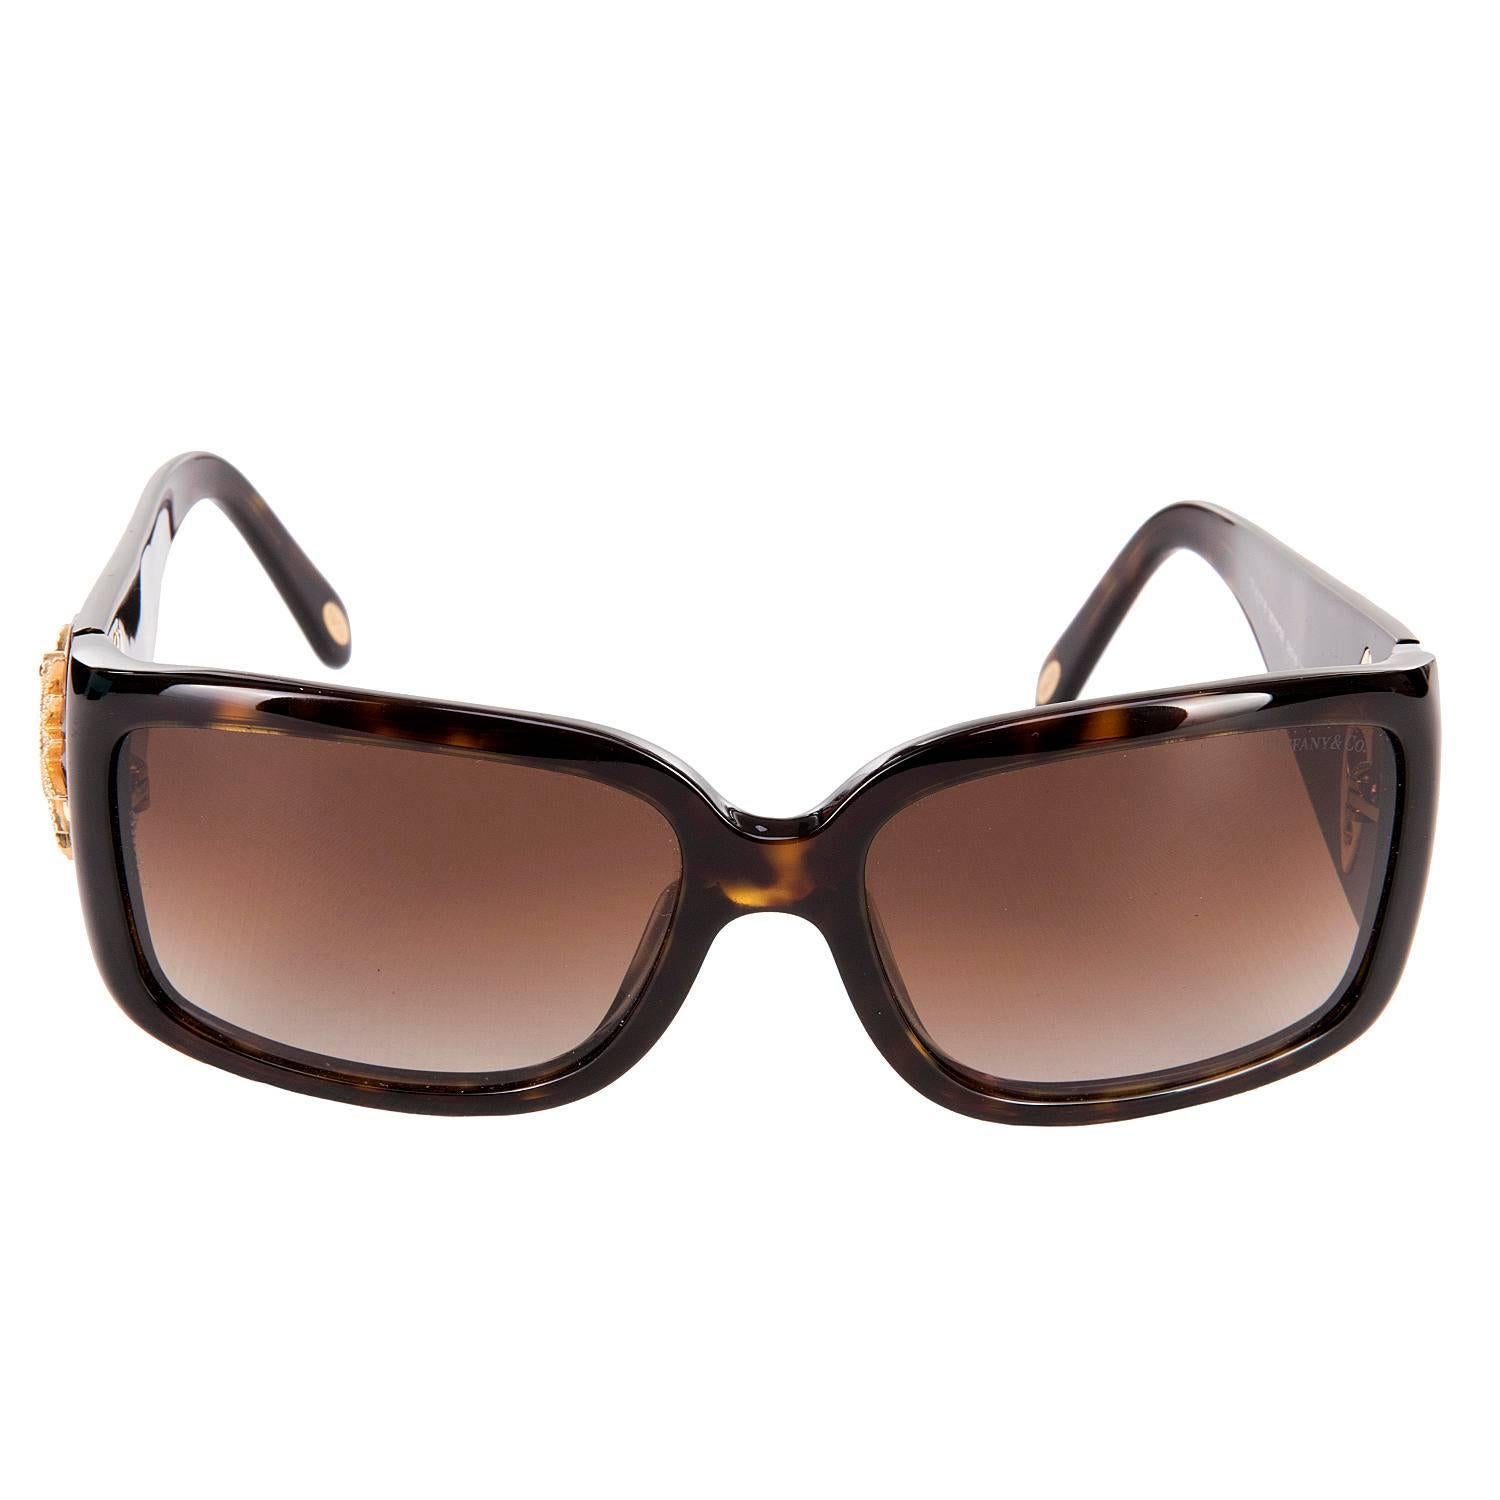 Black WOW Rare Tiffany 'Sunburst' Tortoiseshell Sunglasses with Swarovski Jewel inlays